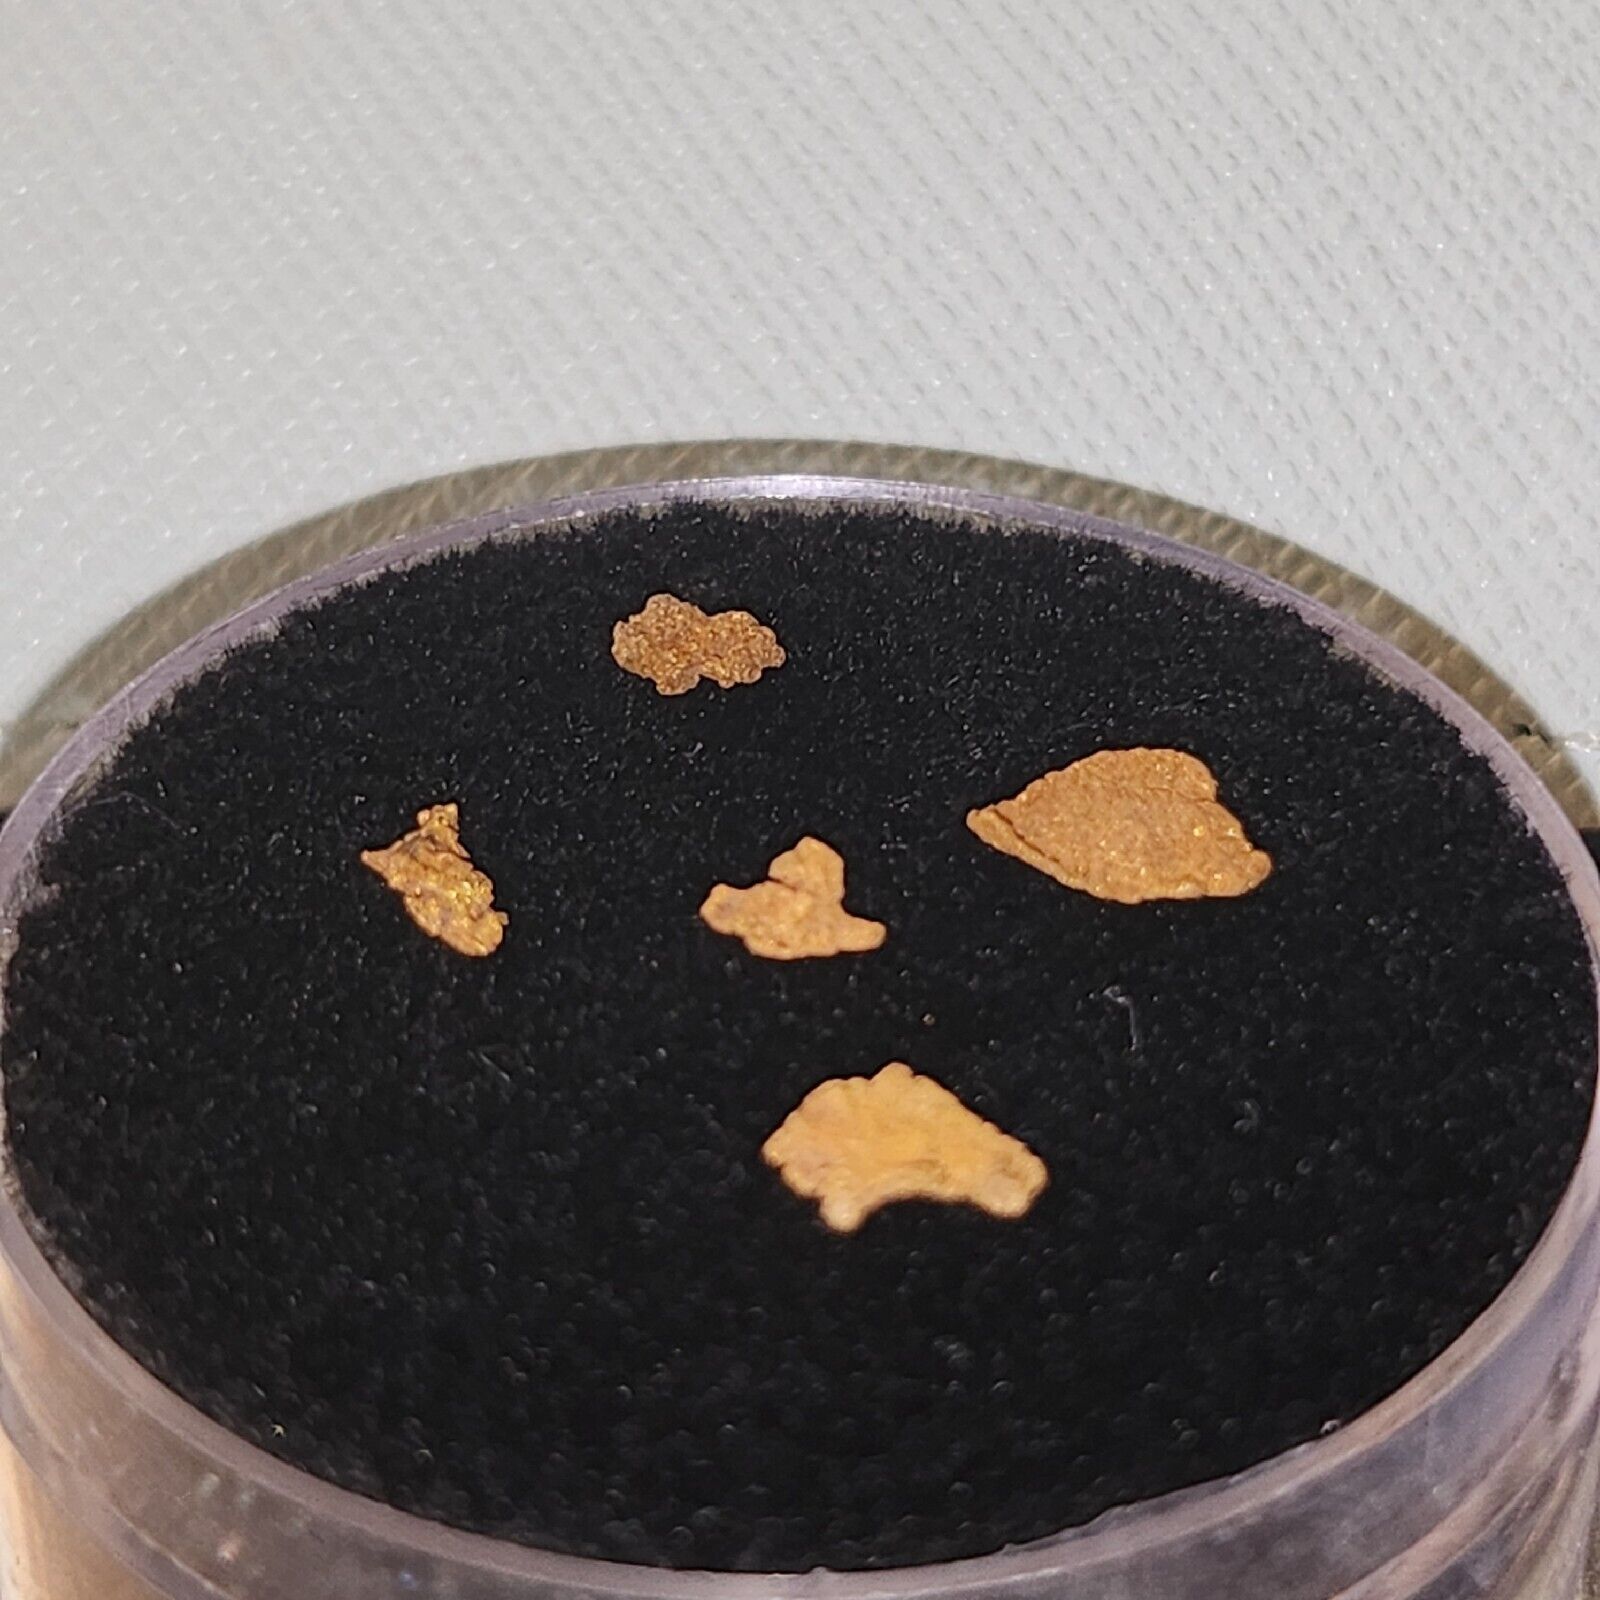 MASSIF FRANCE Rare Native Natural 5pcs Gold nugget Specimen Collector Lot Без бренда - фотография #9